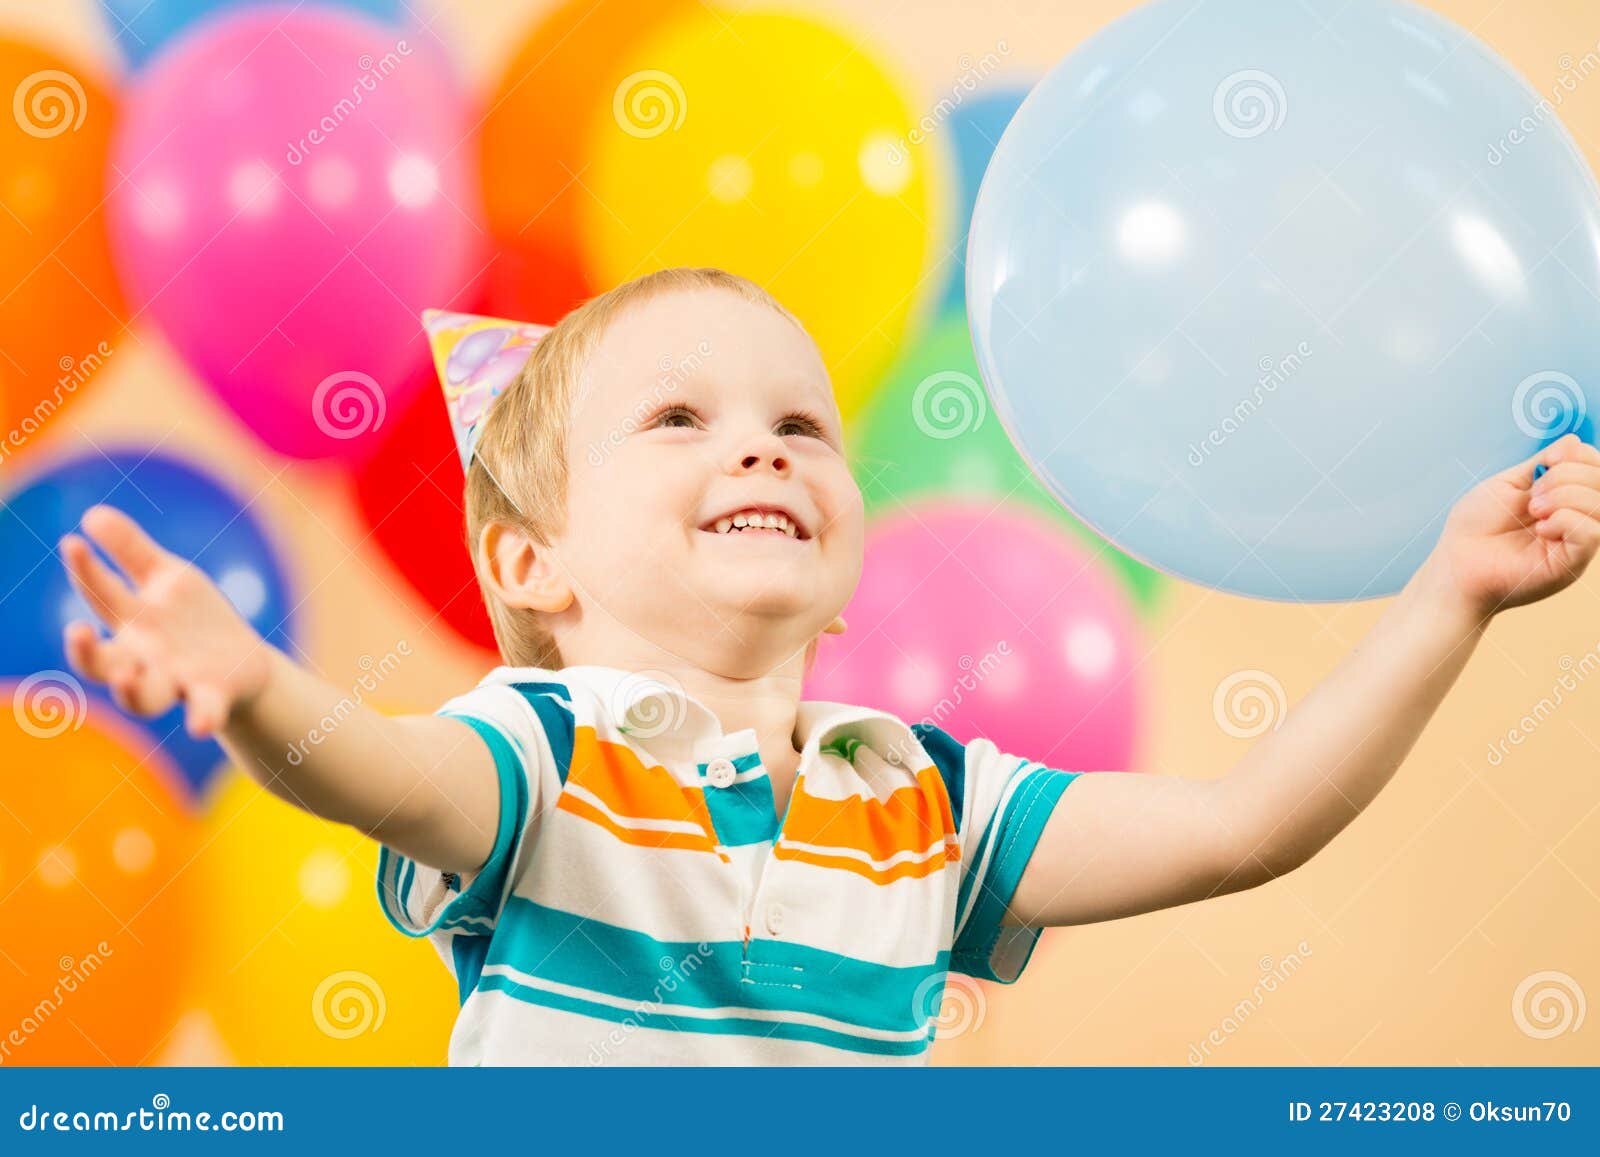 Opsommen Haringen Voorkeursbehandeling 4,011 Baby Balloons Boy Stock Photos - Free & Royalty-Free Stock Photos  from Dreamstime